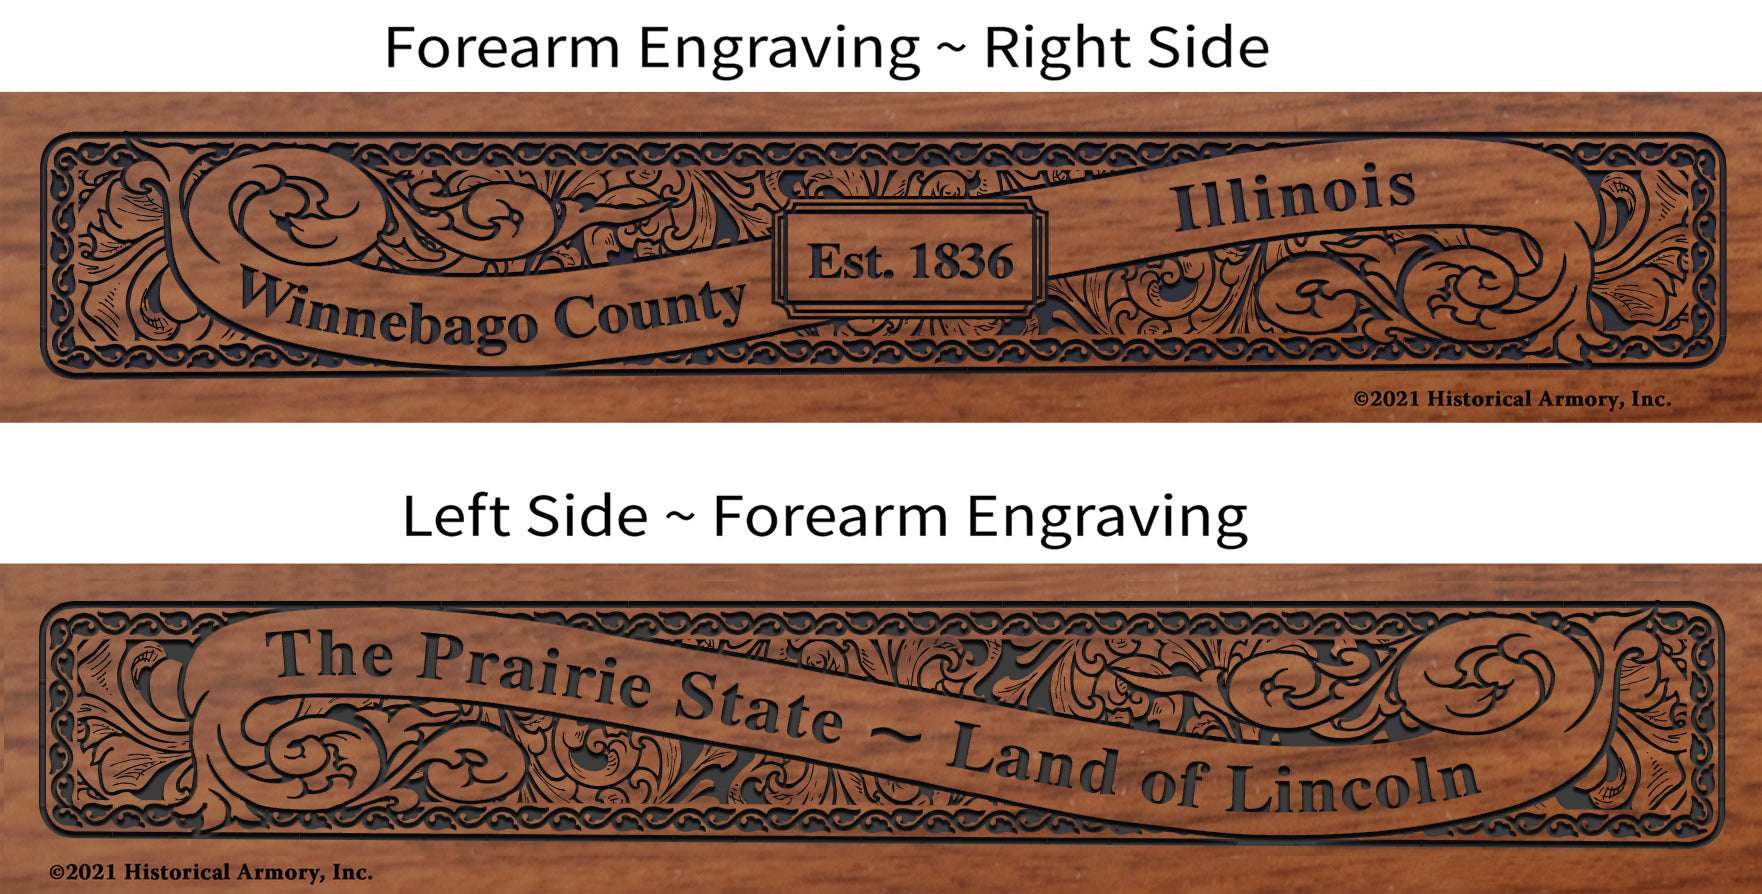 Winnebago County Illinois Establishment and Motto History Engraved Rifle Forearm